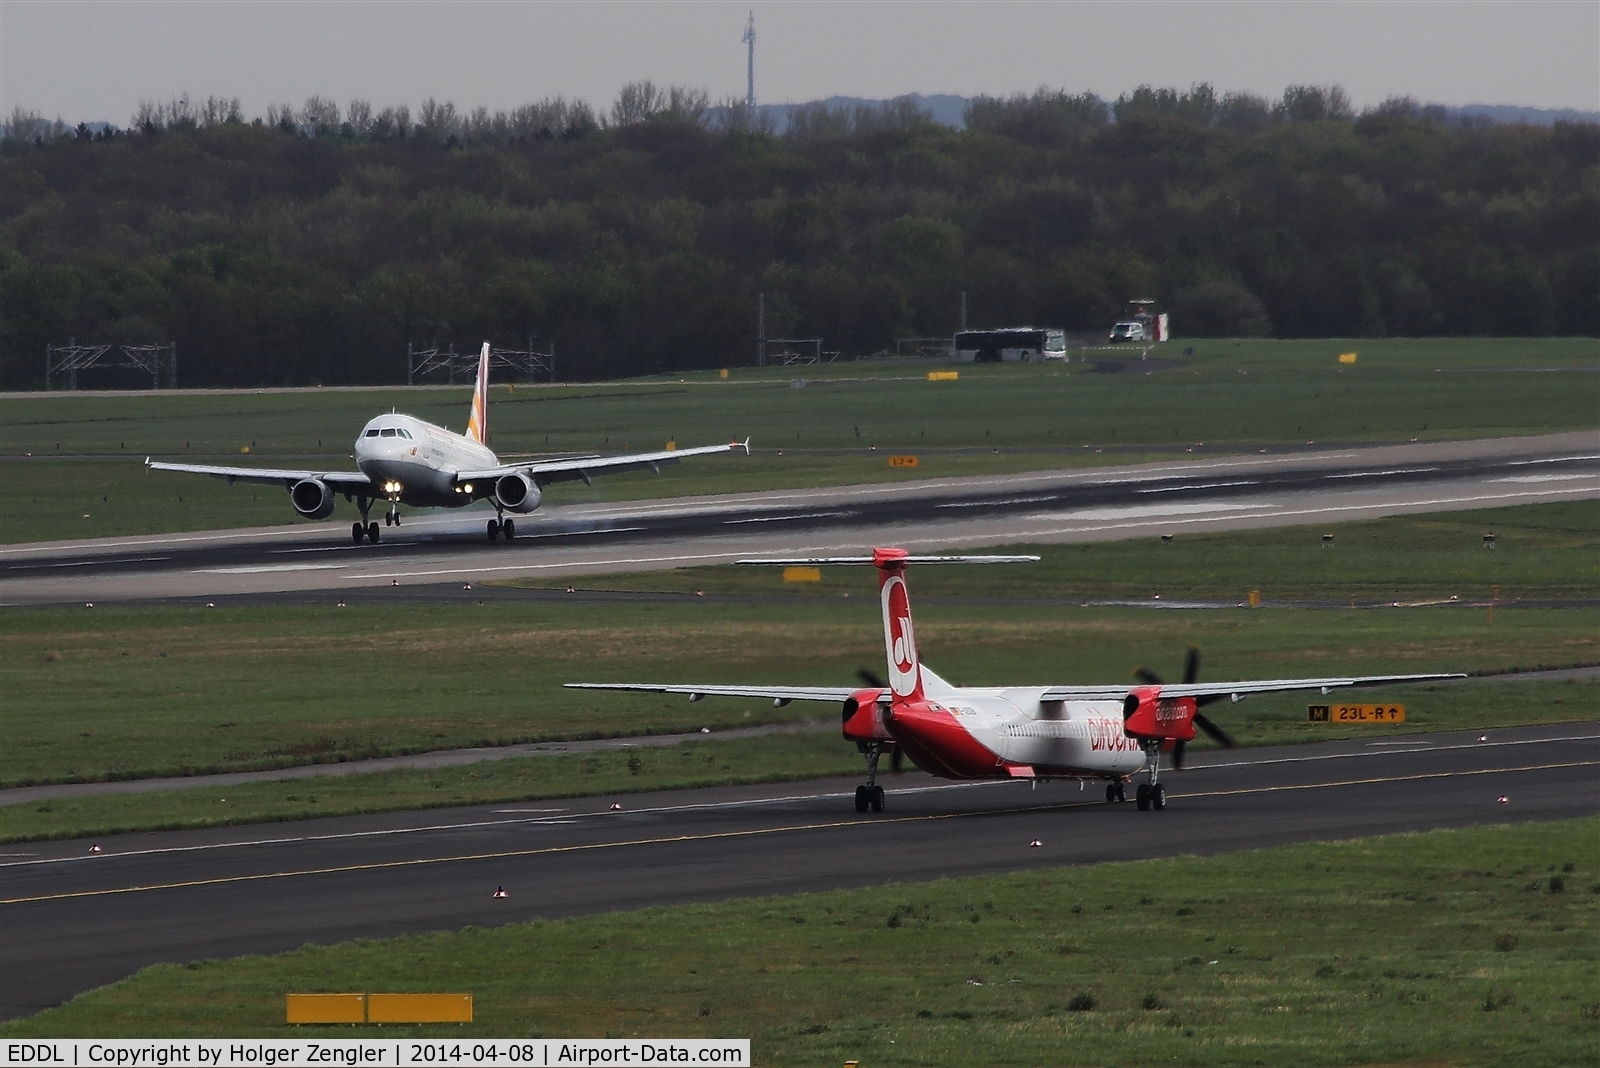 Düsseldorf International Airport, Düsseldorf Germany (EDDL) - One is going the other is preparing to follow on rwy 23R...